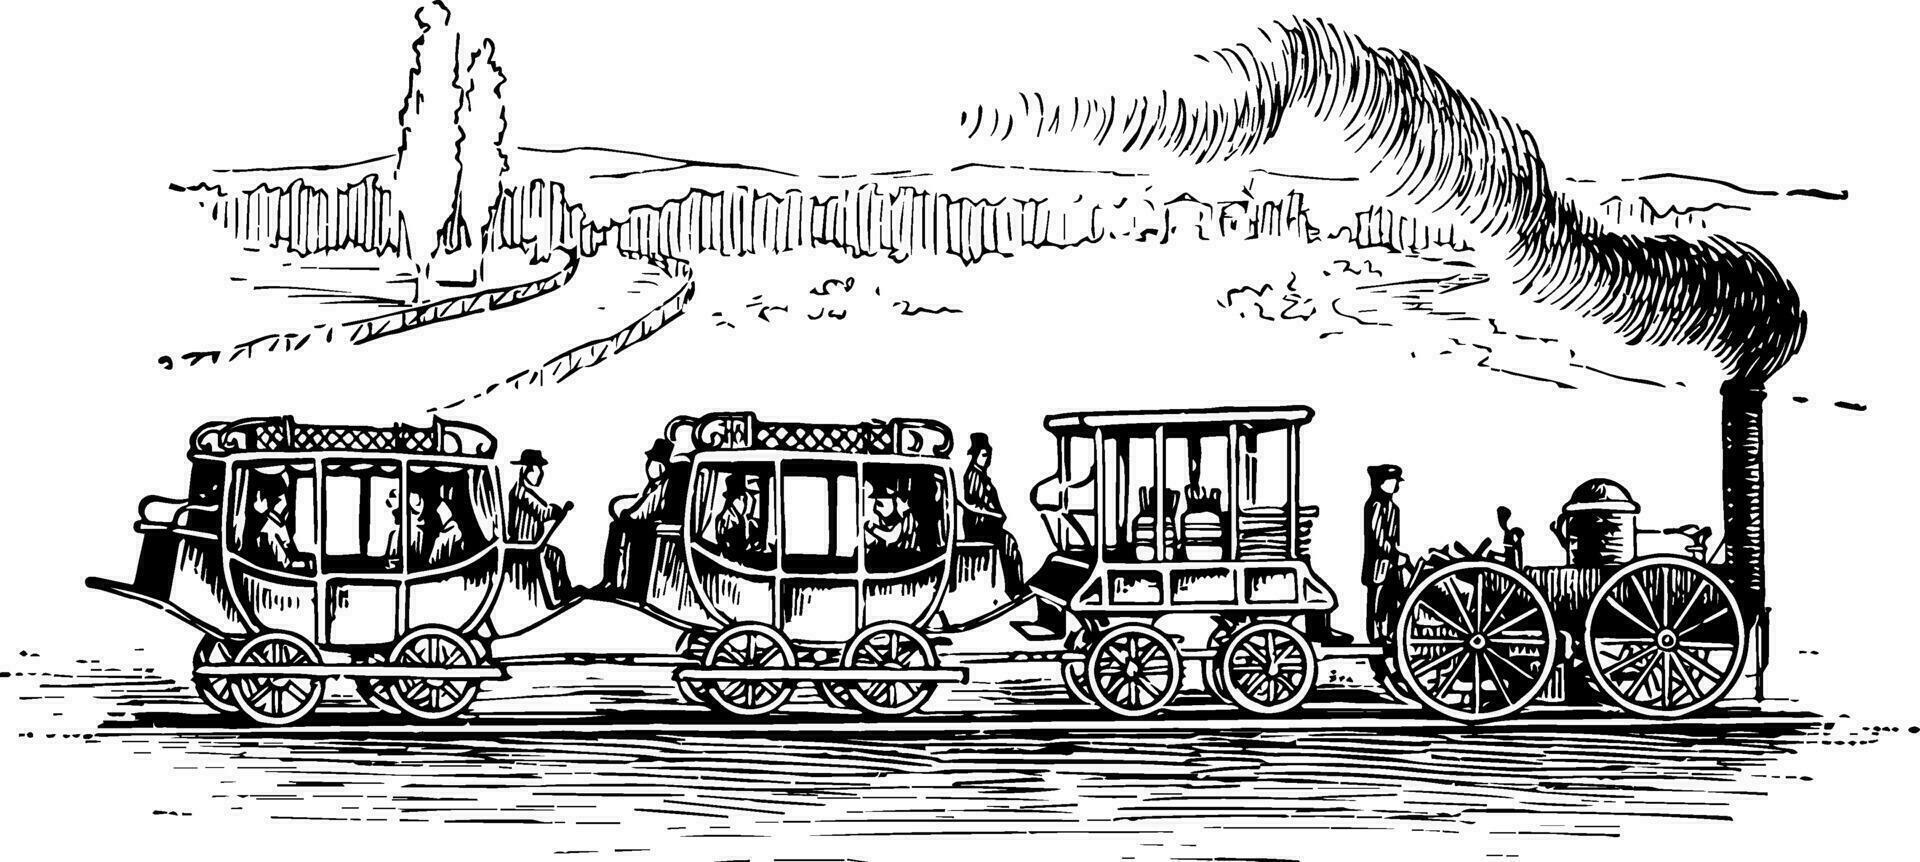 Railroad Train vintage illustration vector